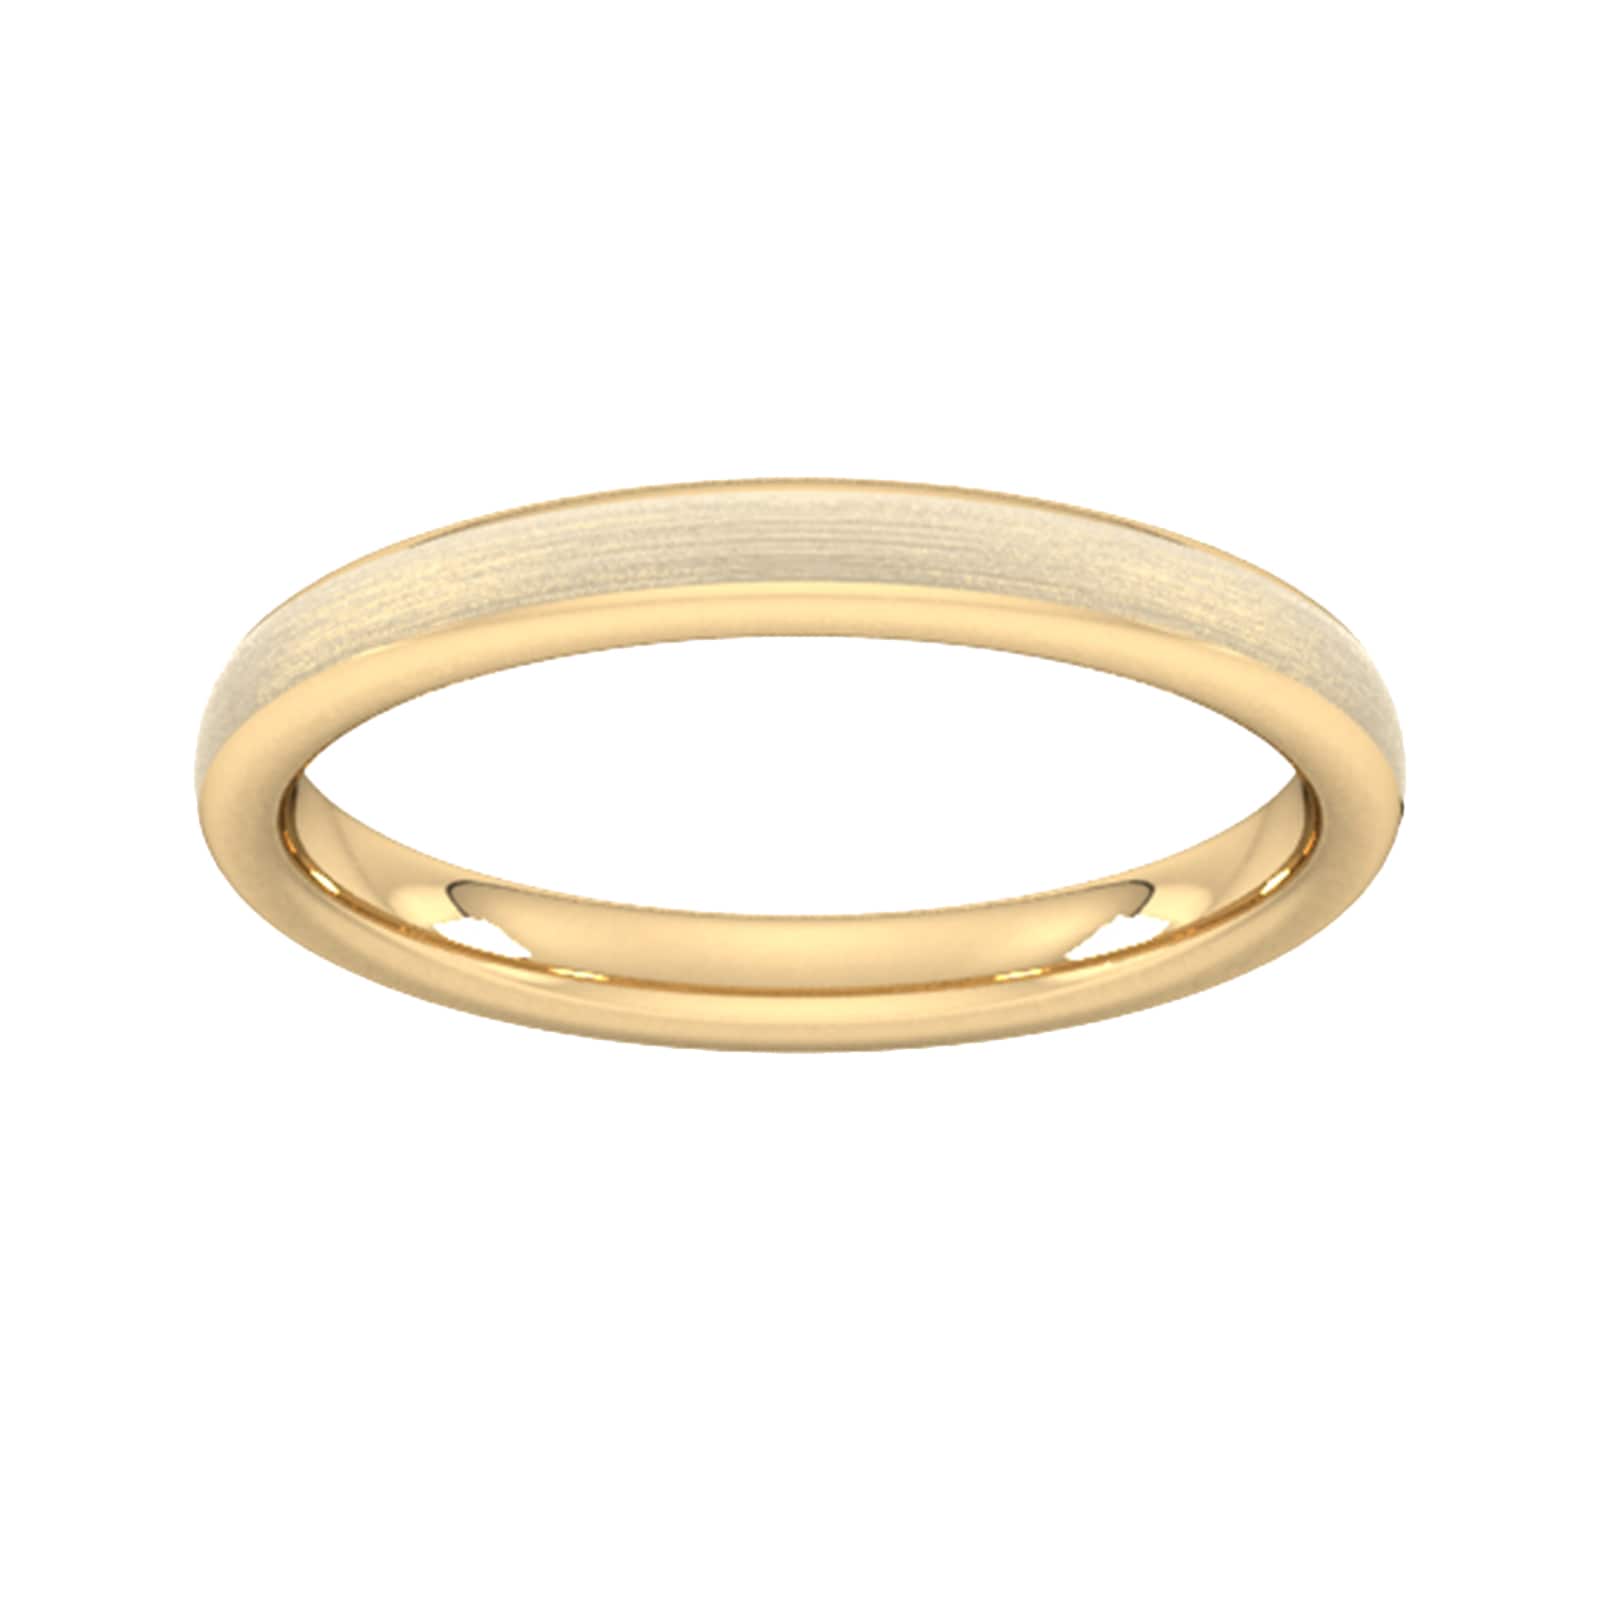 2.5mm Slight Court Heavy Matt Finished Wedding Ring In 18 Carat Yellow Gold - Ring Size U